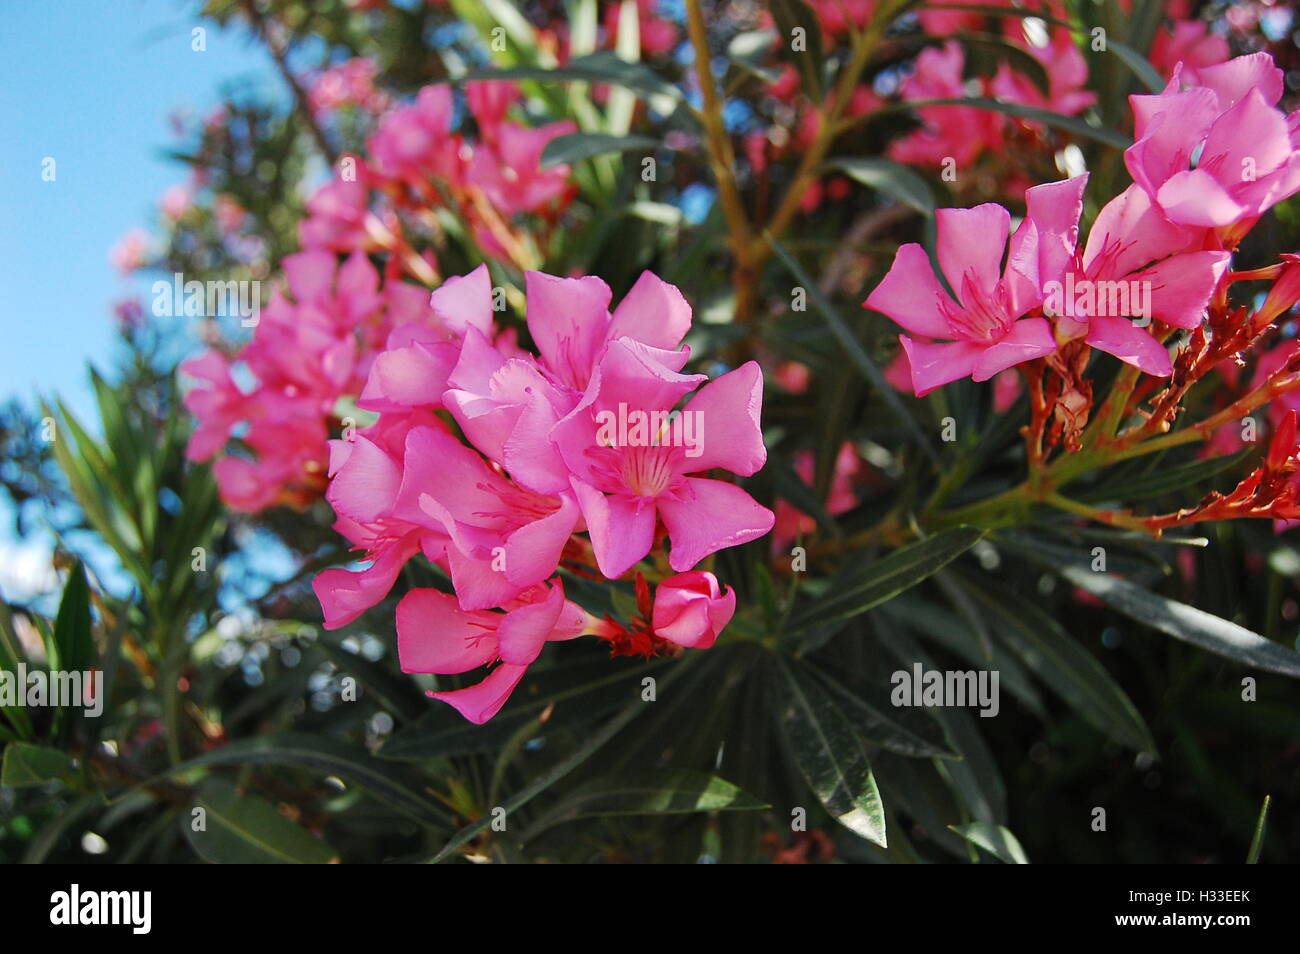 Oleander flower from Greece Stock Photo